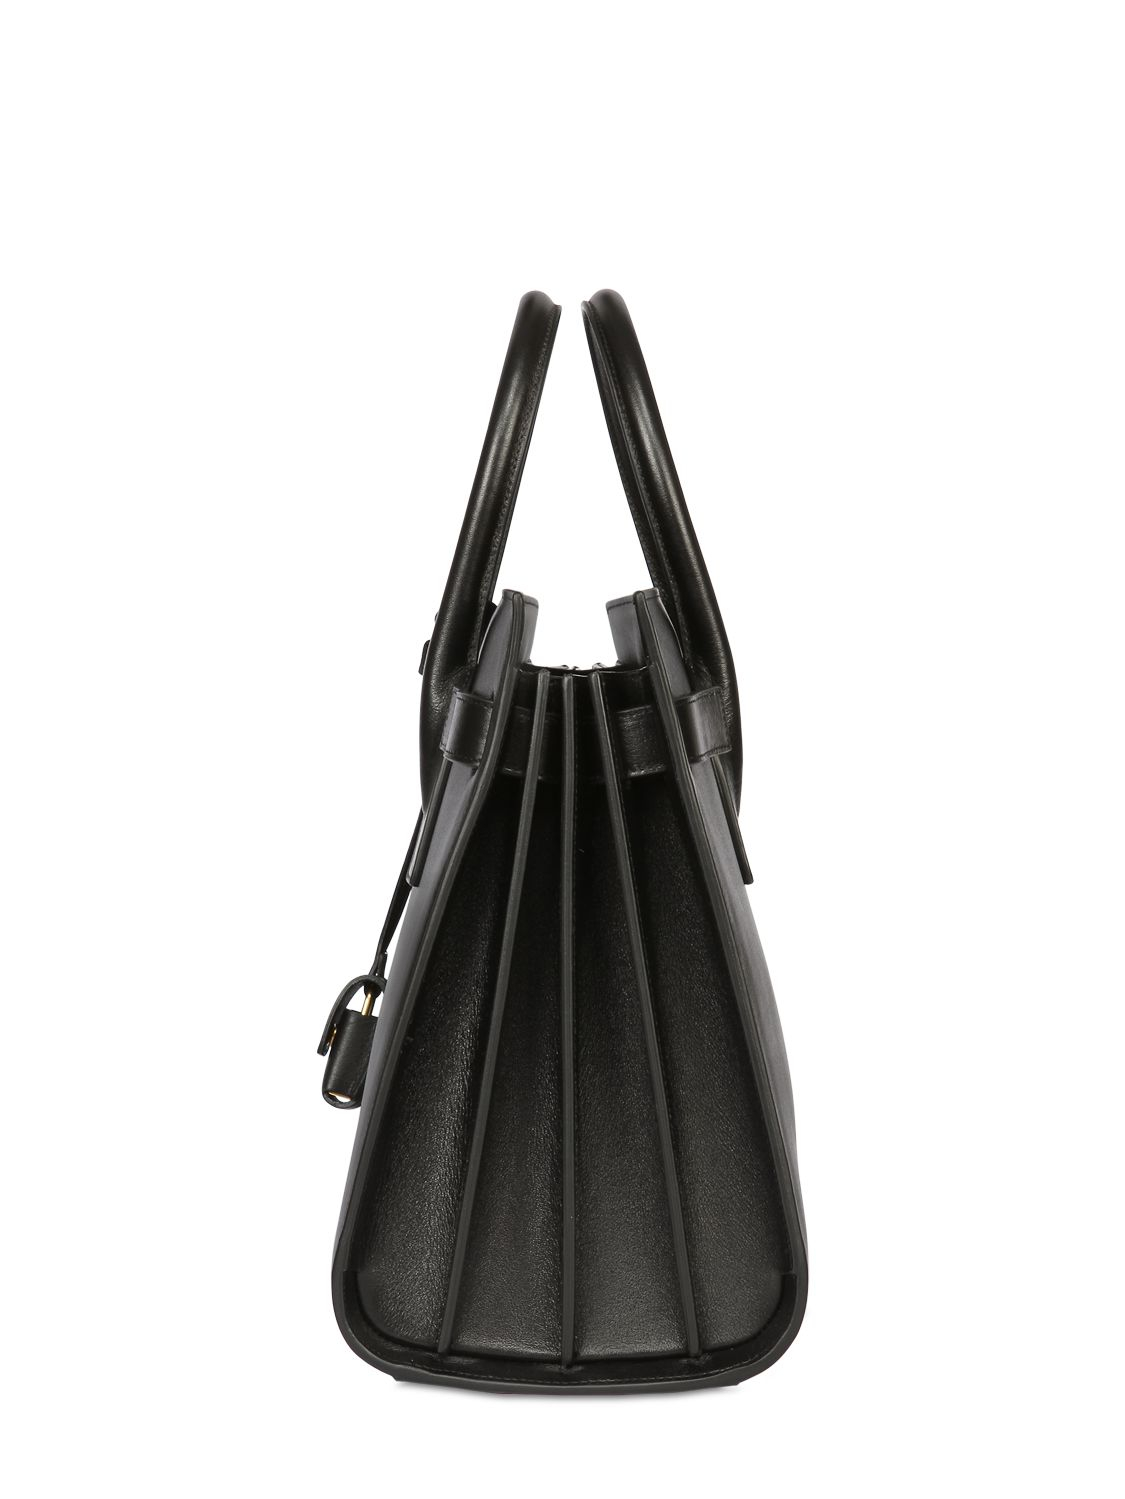 Saint laurent Small Sac De Jour Leather Top Handle Bag in Black | Lyst